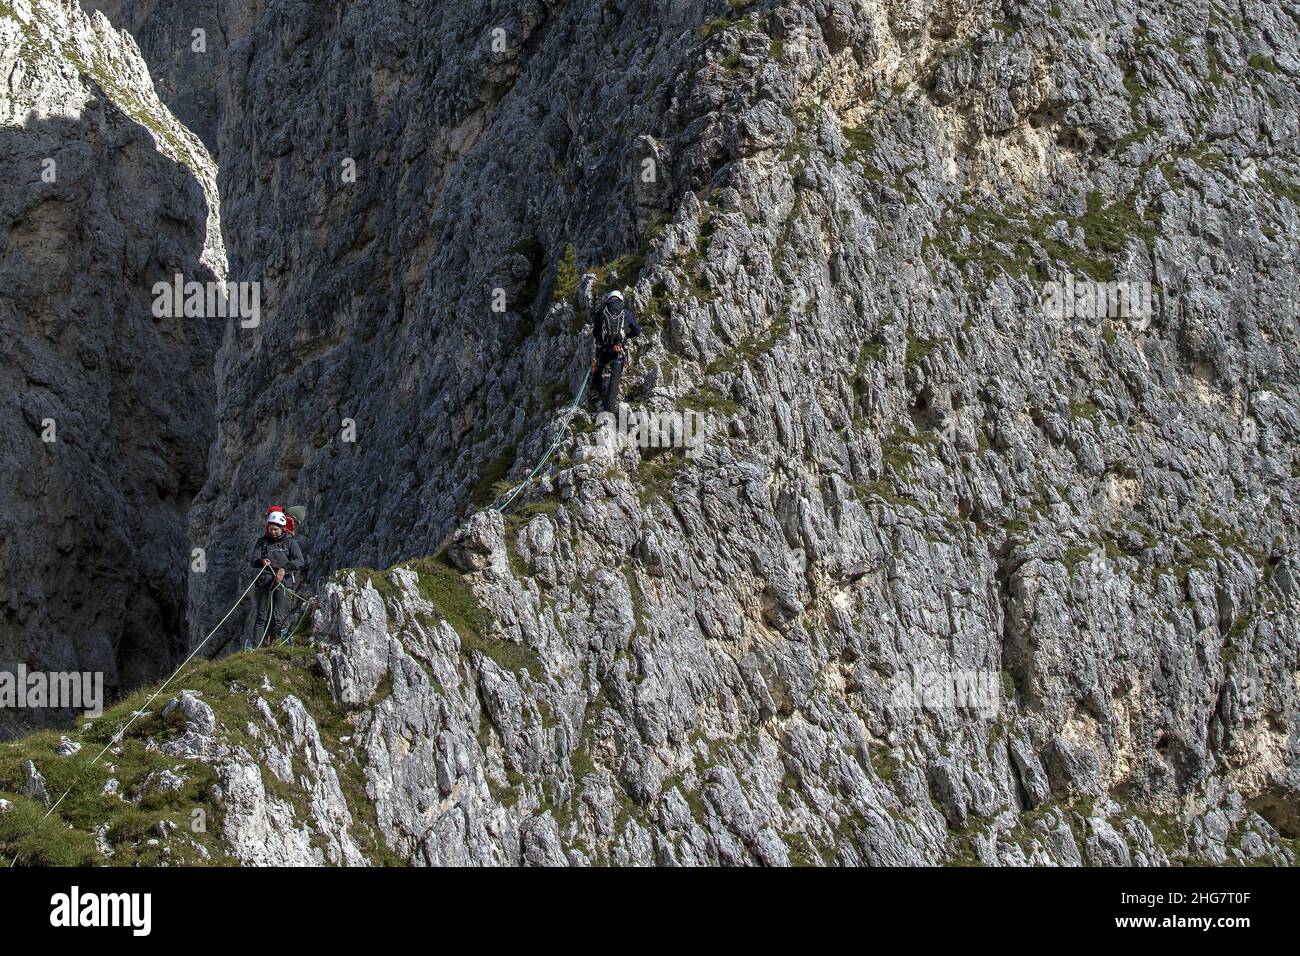 Italian alpine climber on Cadini Di Misurina Dolomite, Trentino, Italy Stock Photo